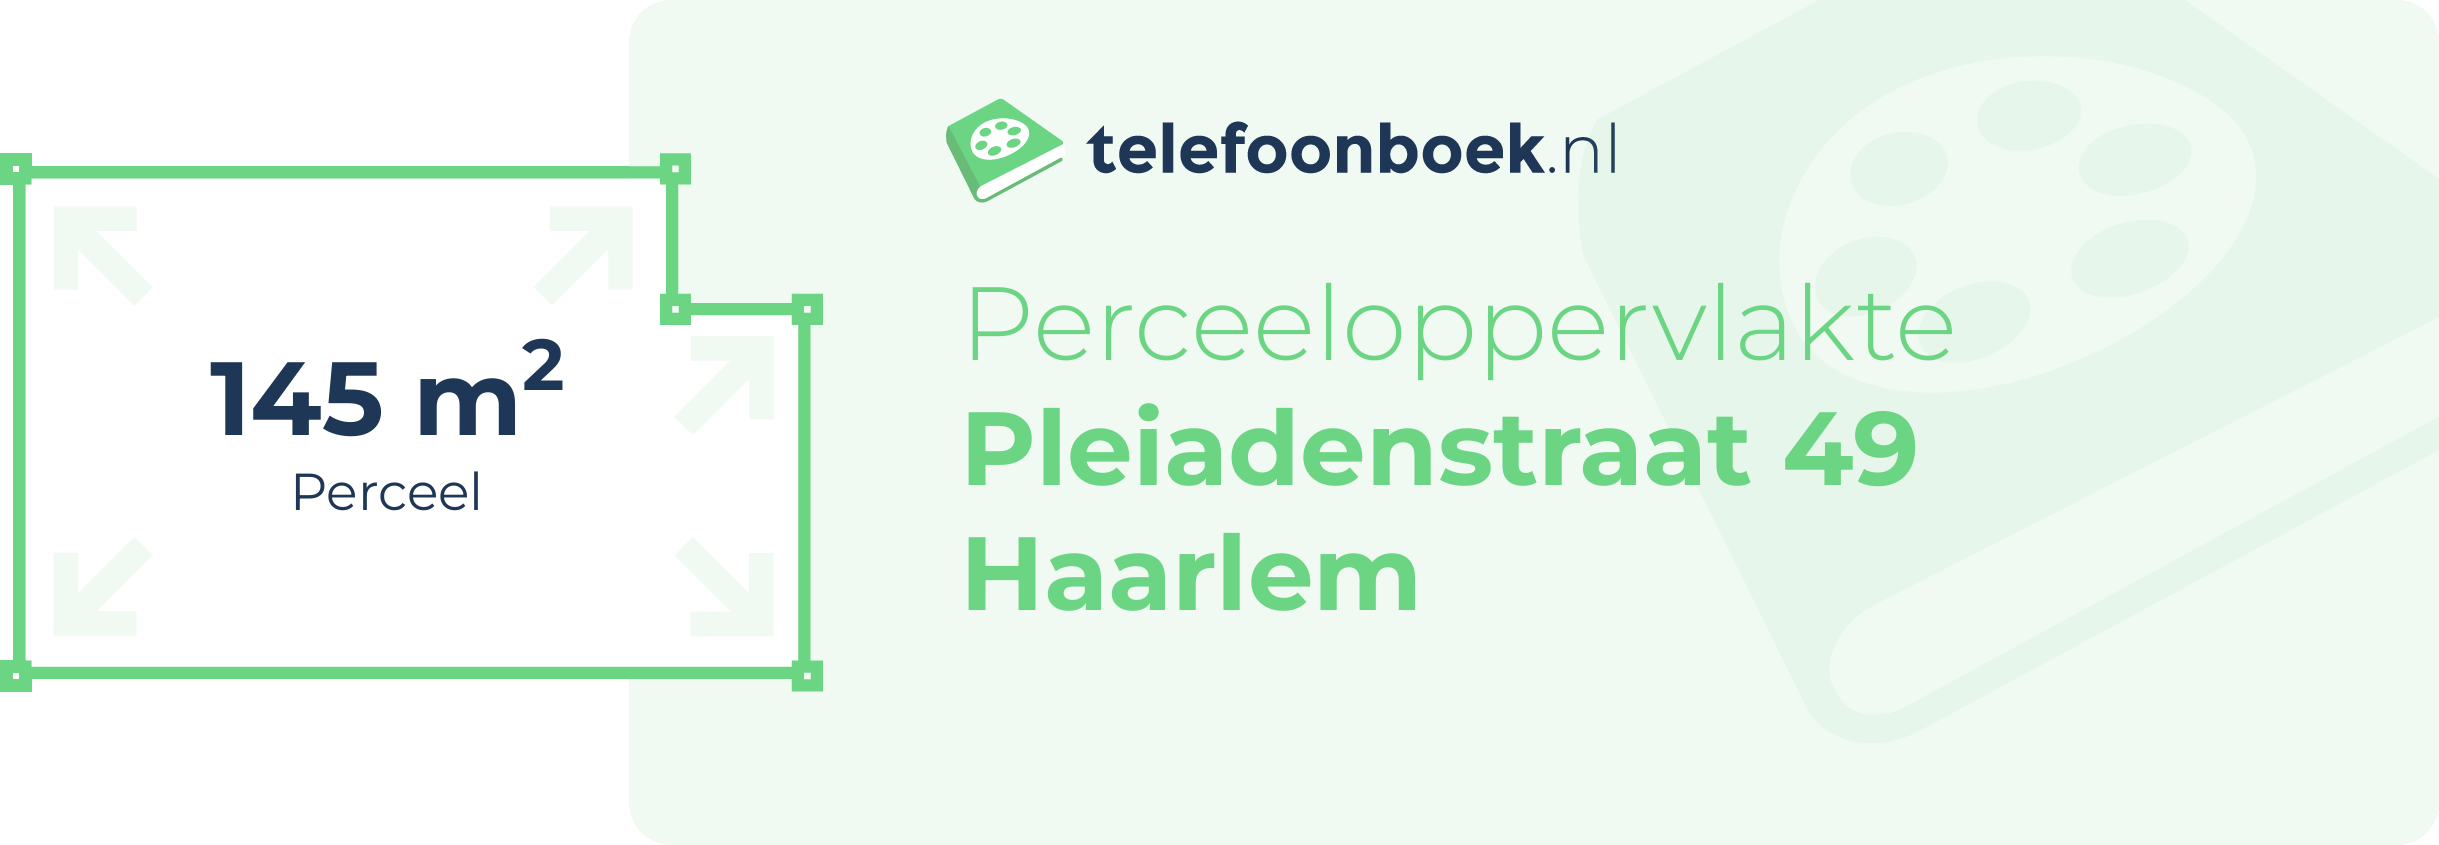 Perceeloppervlakte Pleiadenstraat 49 Haarlem